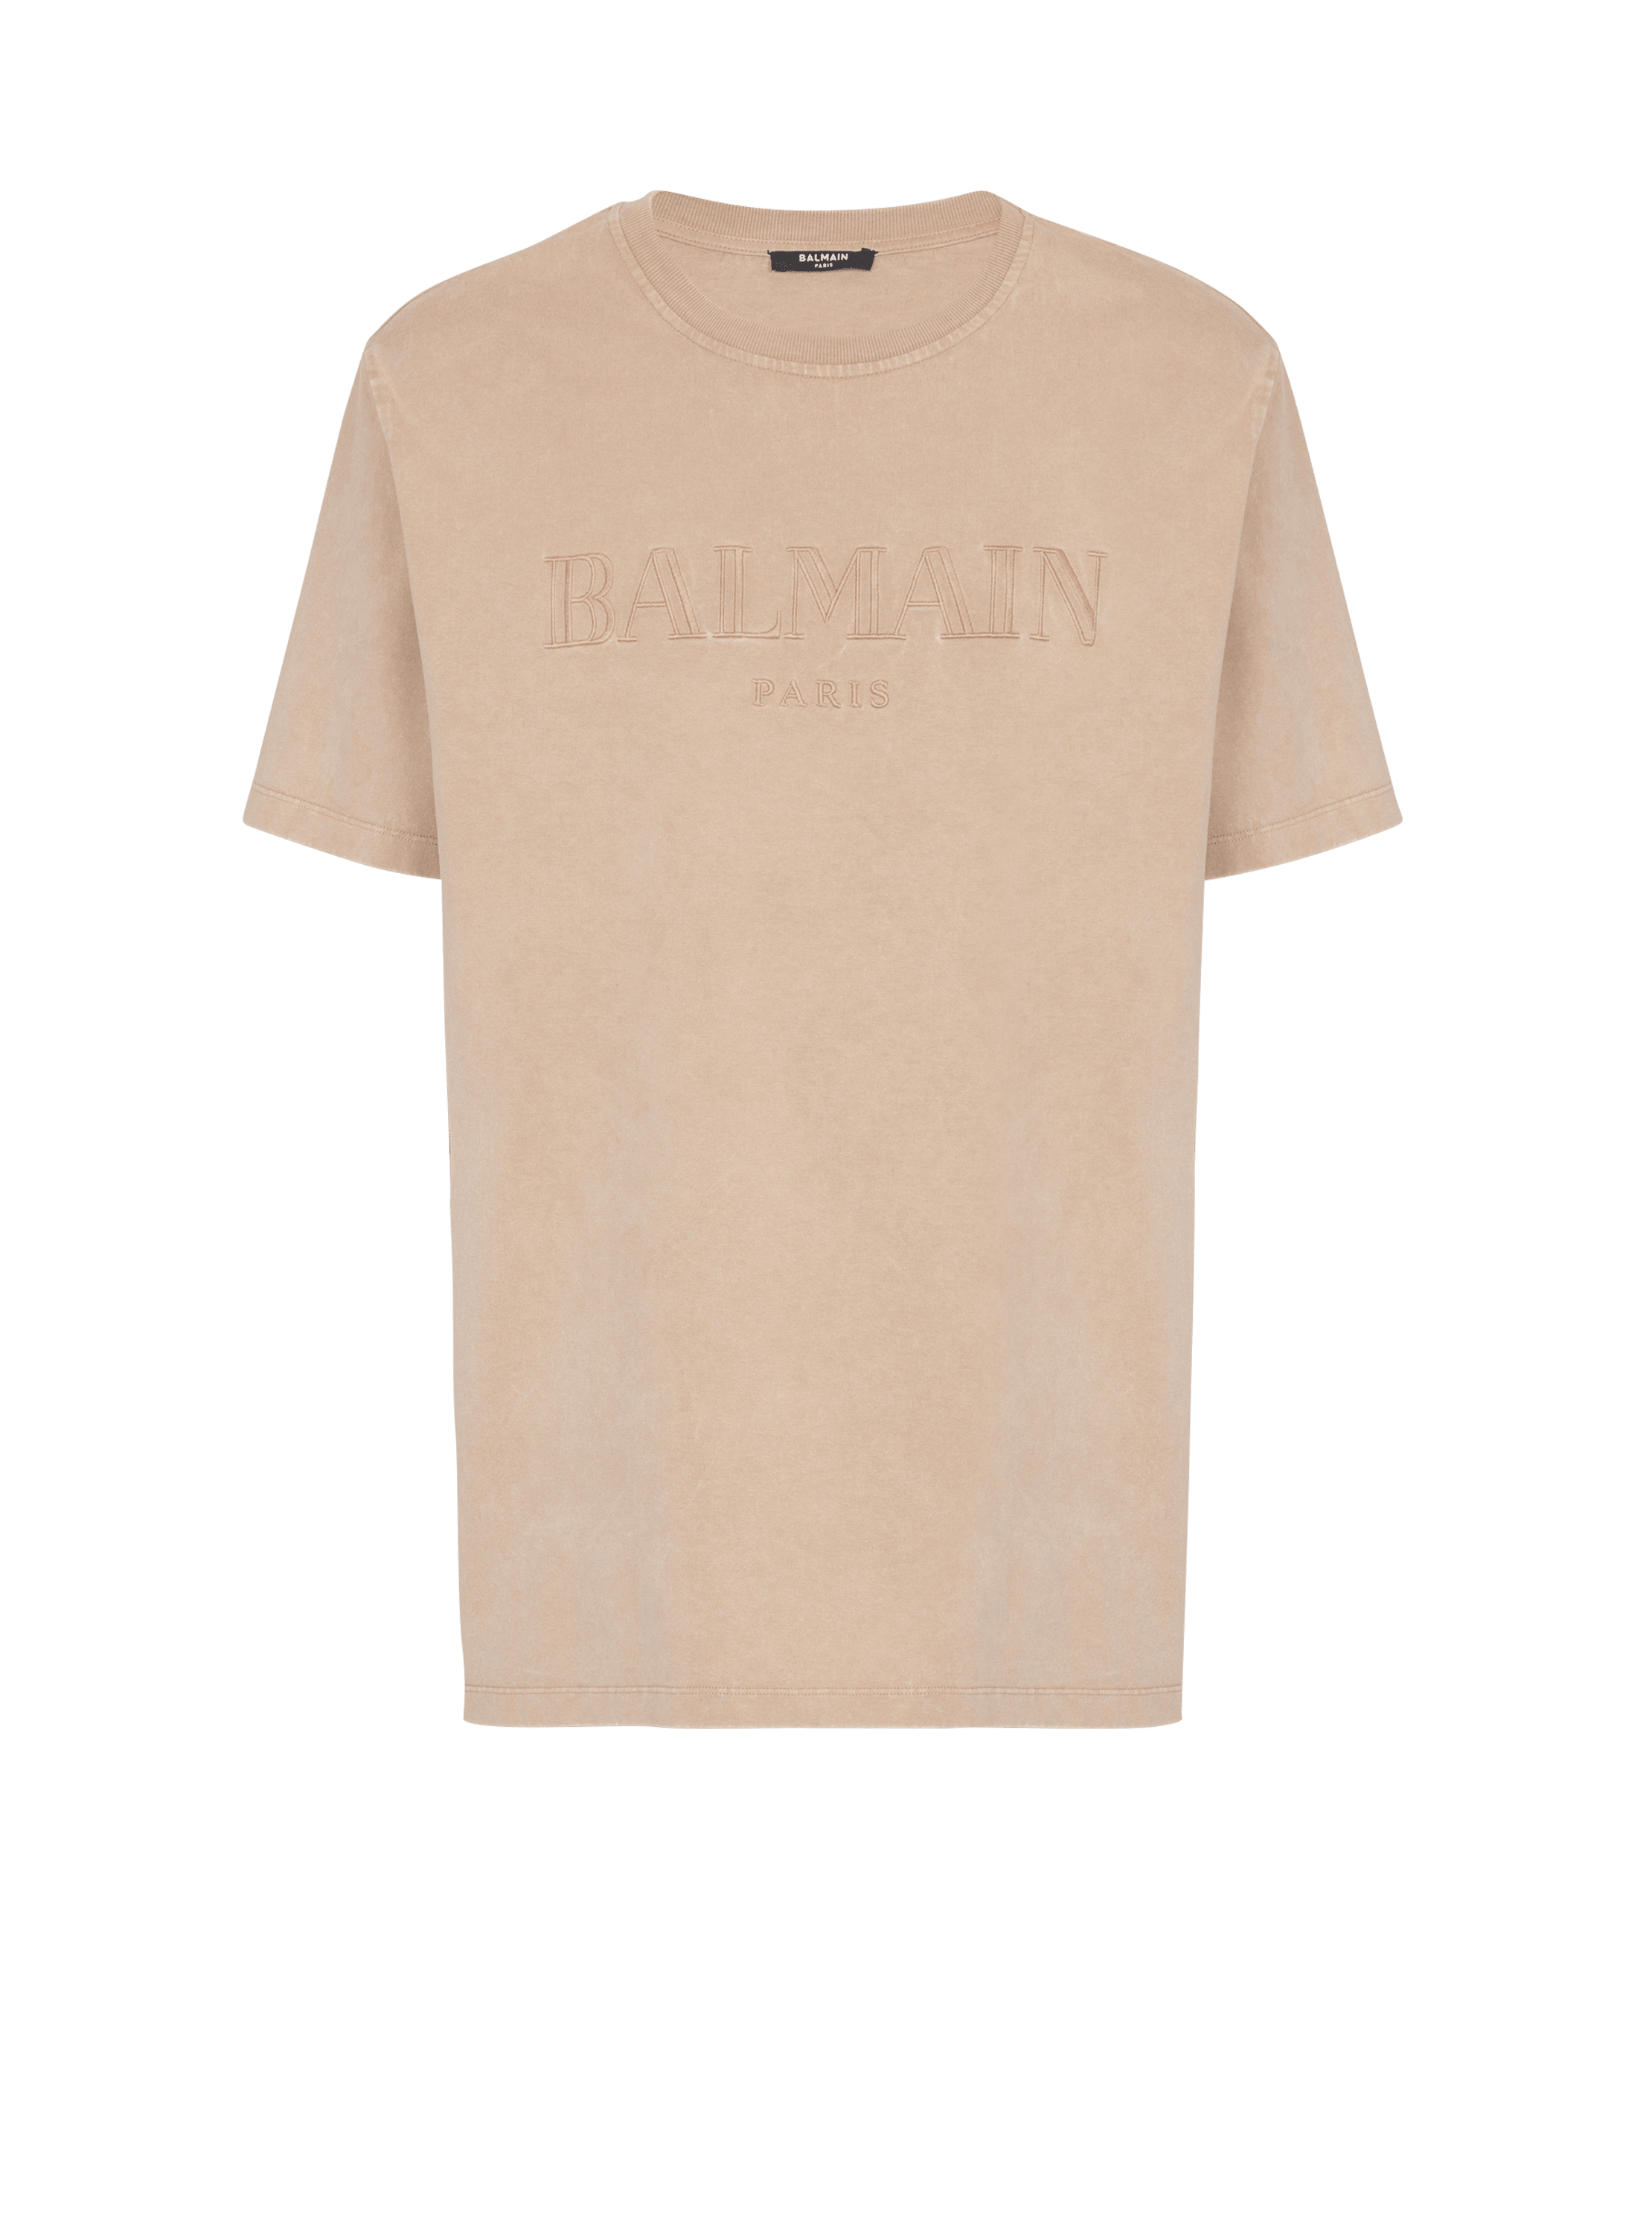 Weites T-Shirt mit Balmain Vintage-Stickerei